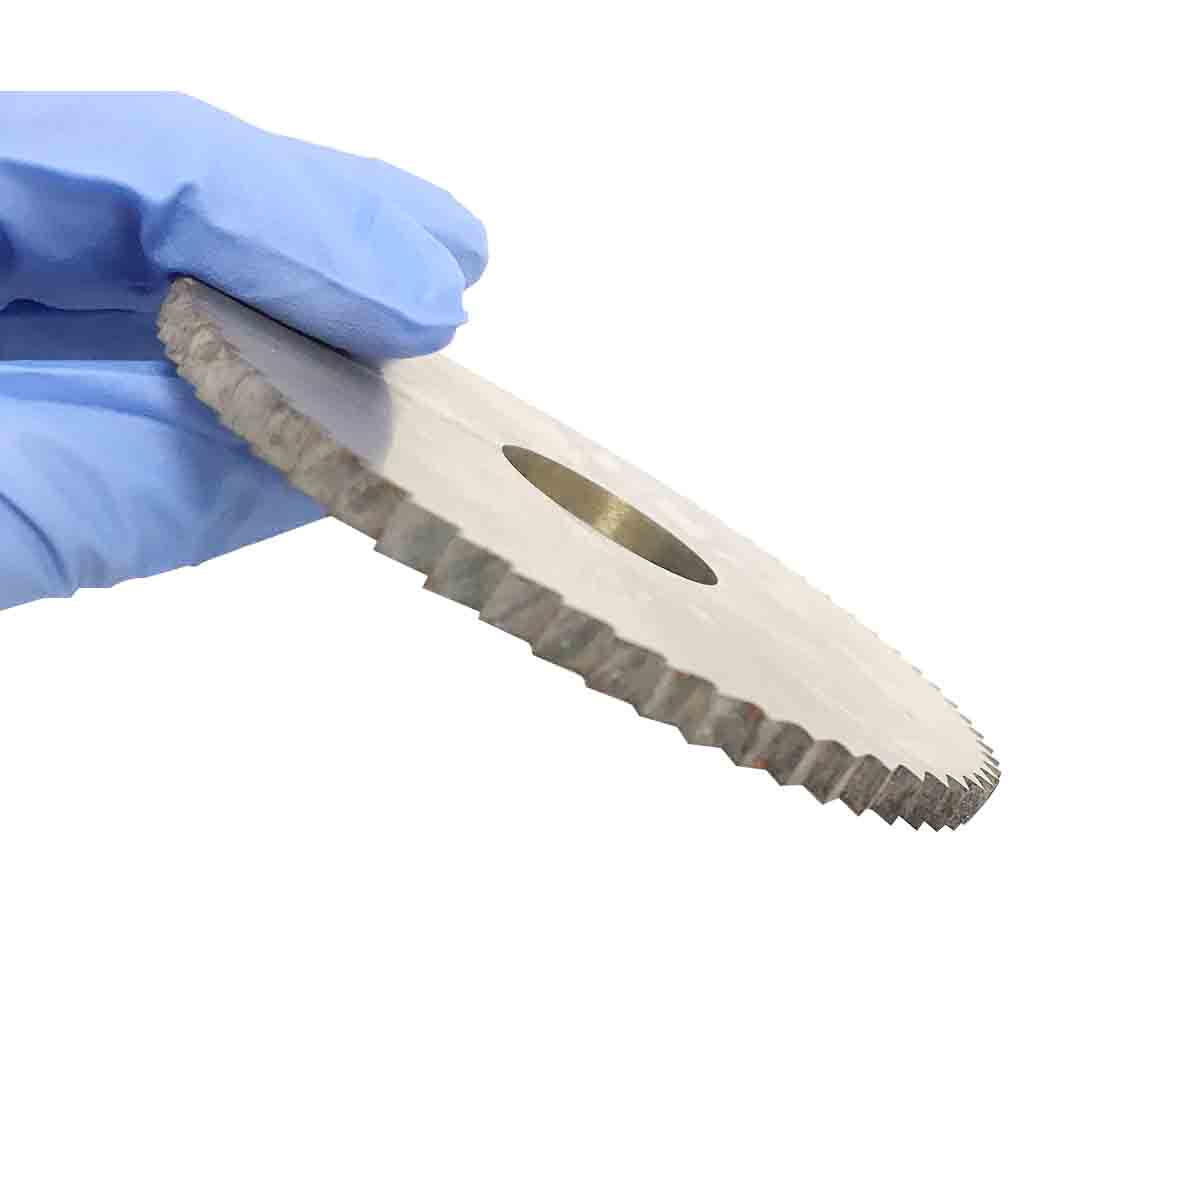 Volframo karbido peilis Apvalus karbido peilis, skirtas pjovimo plokštėms, apvalus peilis elektroninei gamyklai